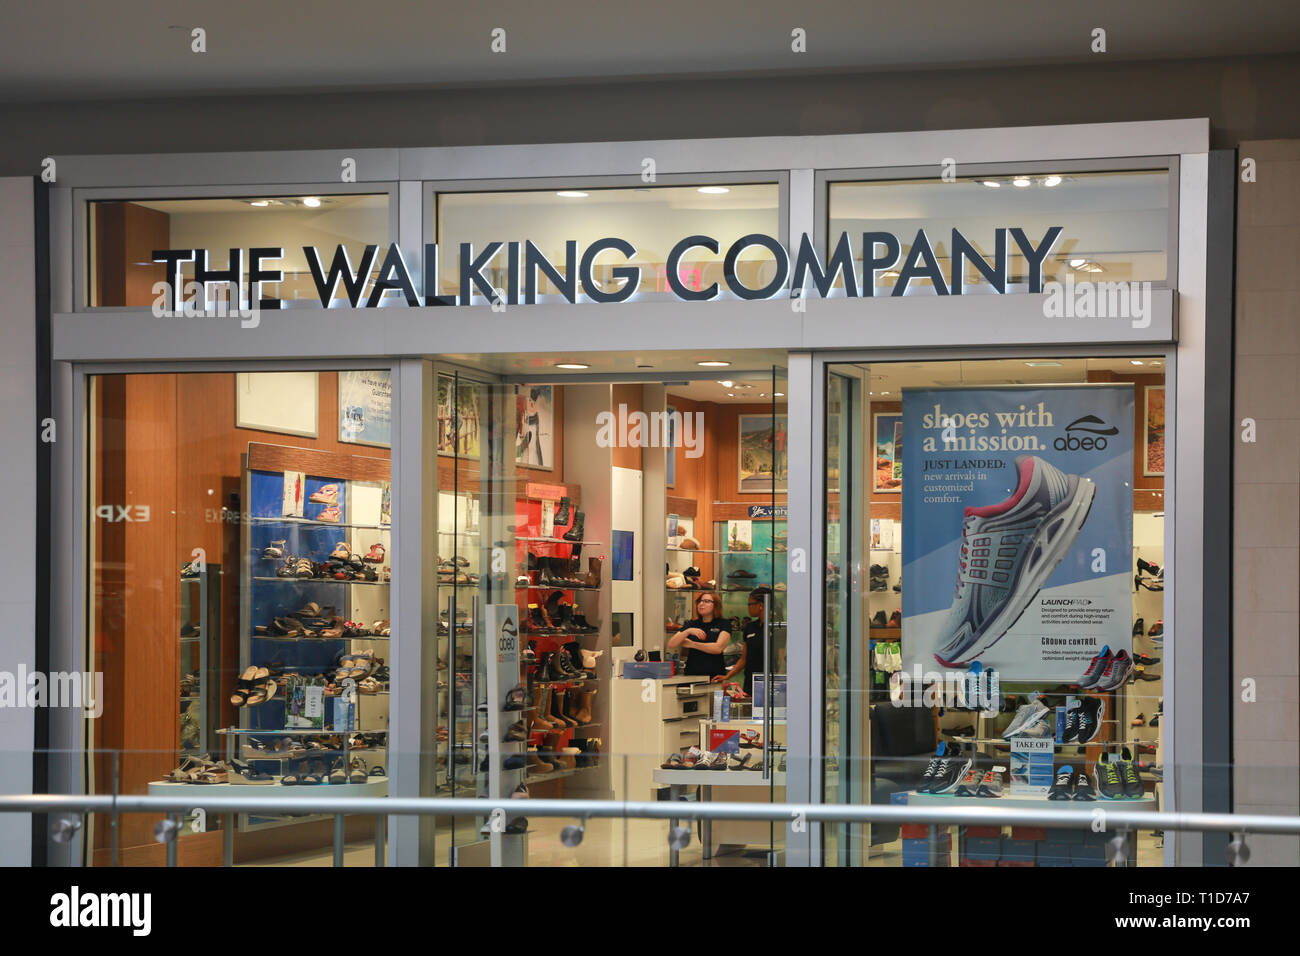 Lawrence County, New Jersey, 24. Februar 2019: Die Walking Company Store Front in Quaker Bridge Mall - Bild Stockfoto